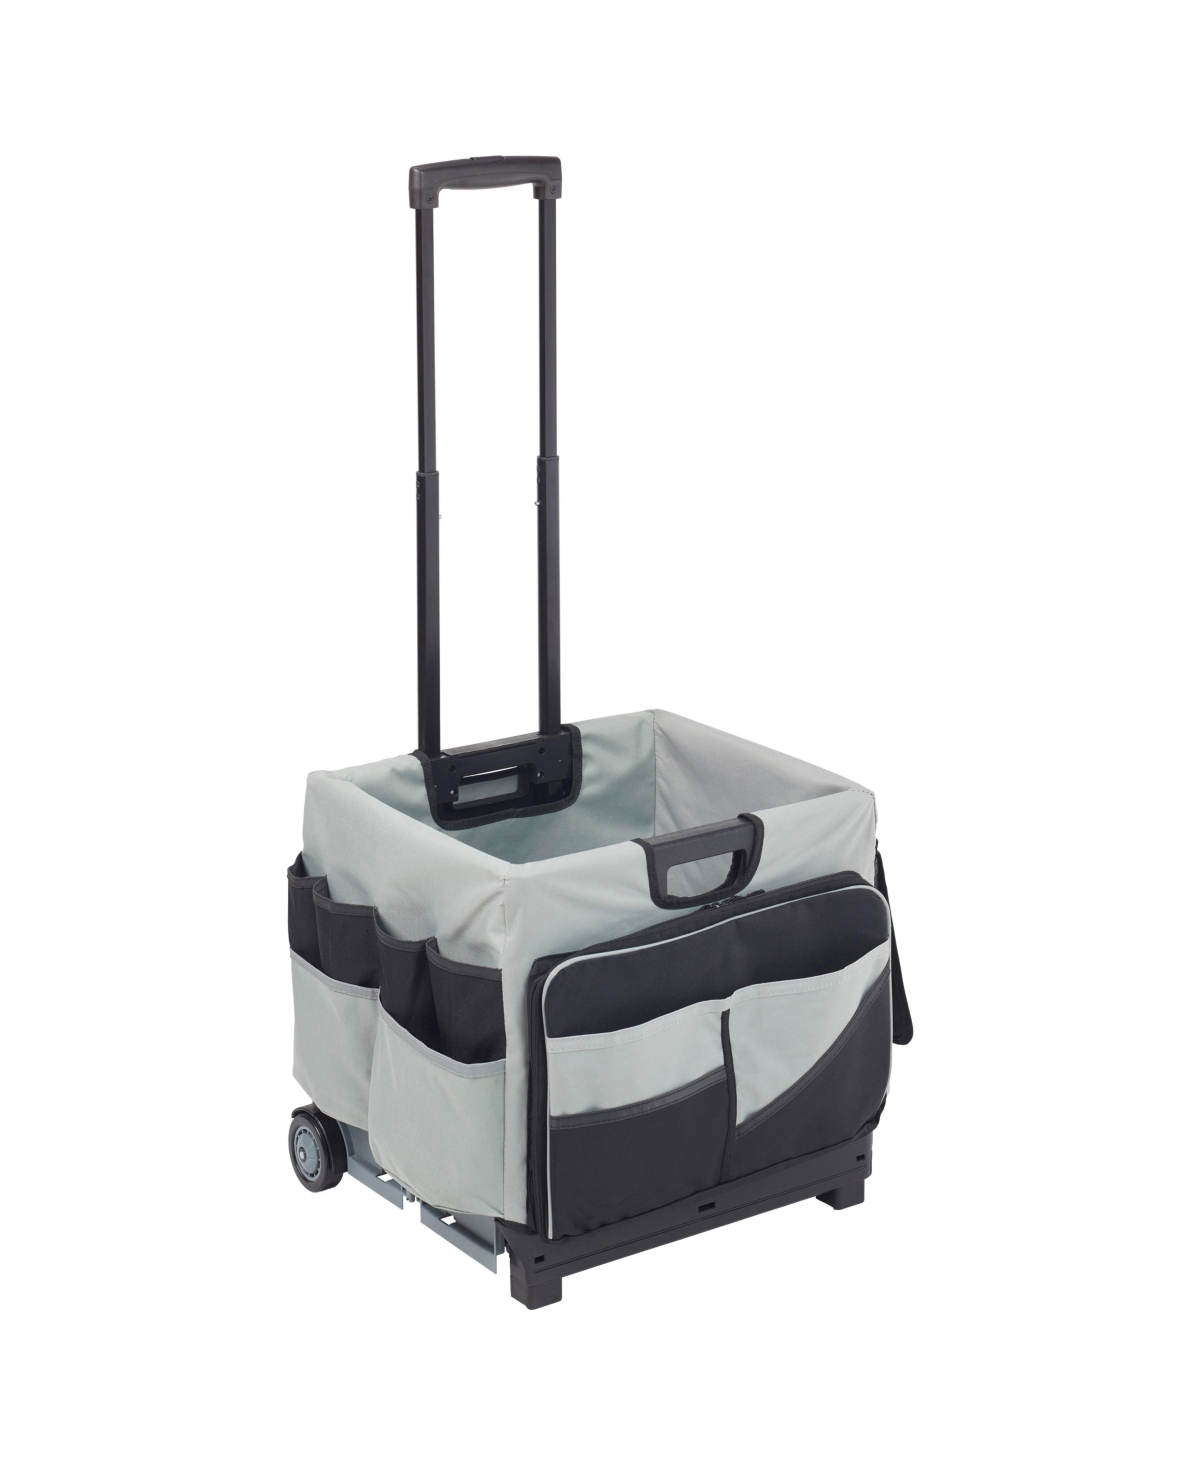 Universal Rolling Cart with Canvas Organizer Bag, Black - Black